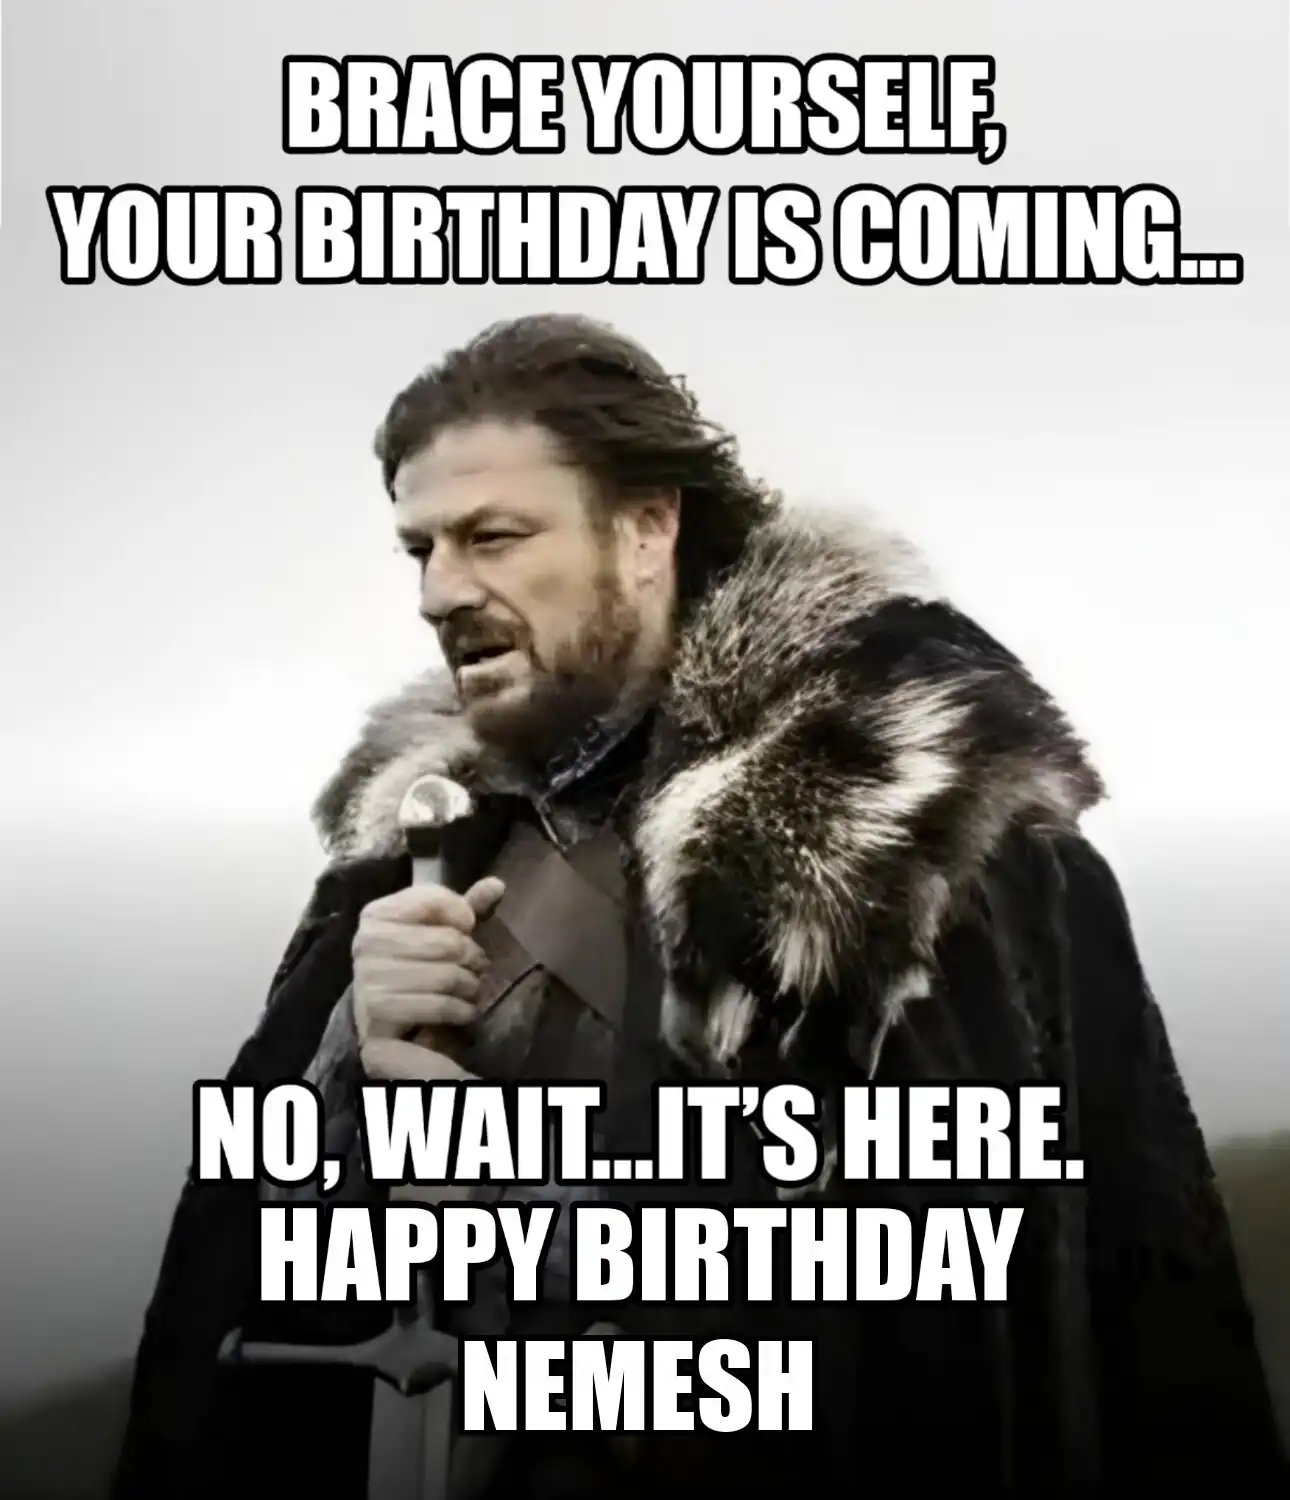 Happy Birthday Nemesh Brace Yourself Your Birthday Is Coming Meme